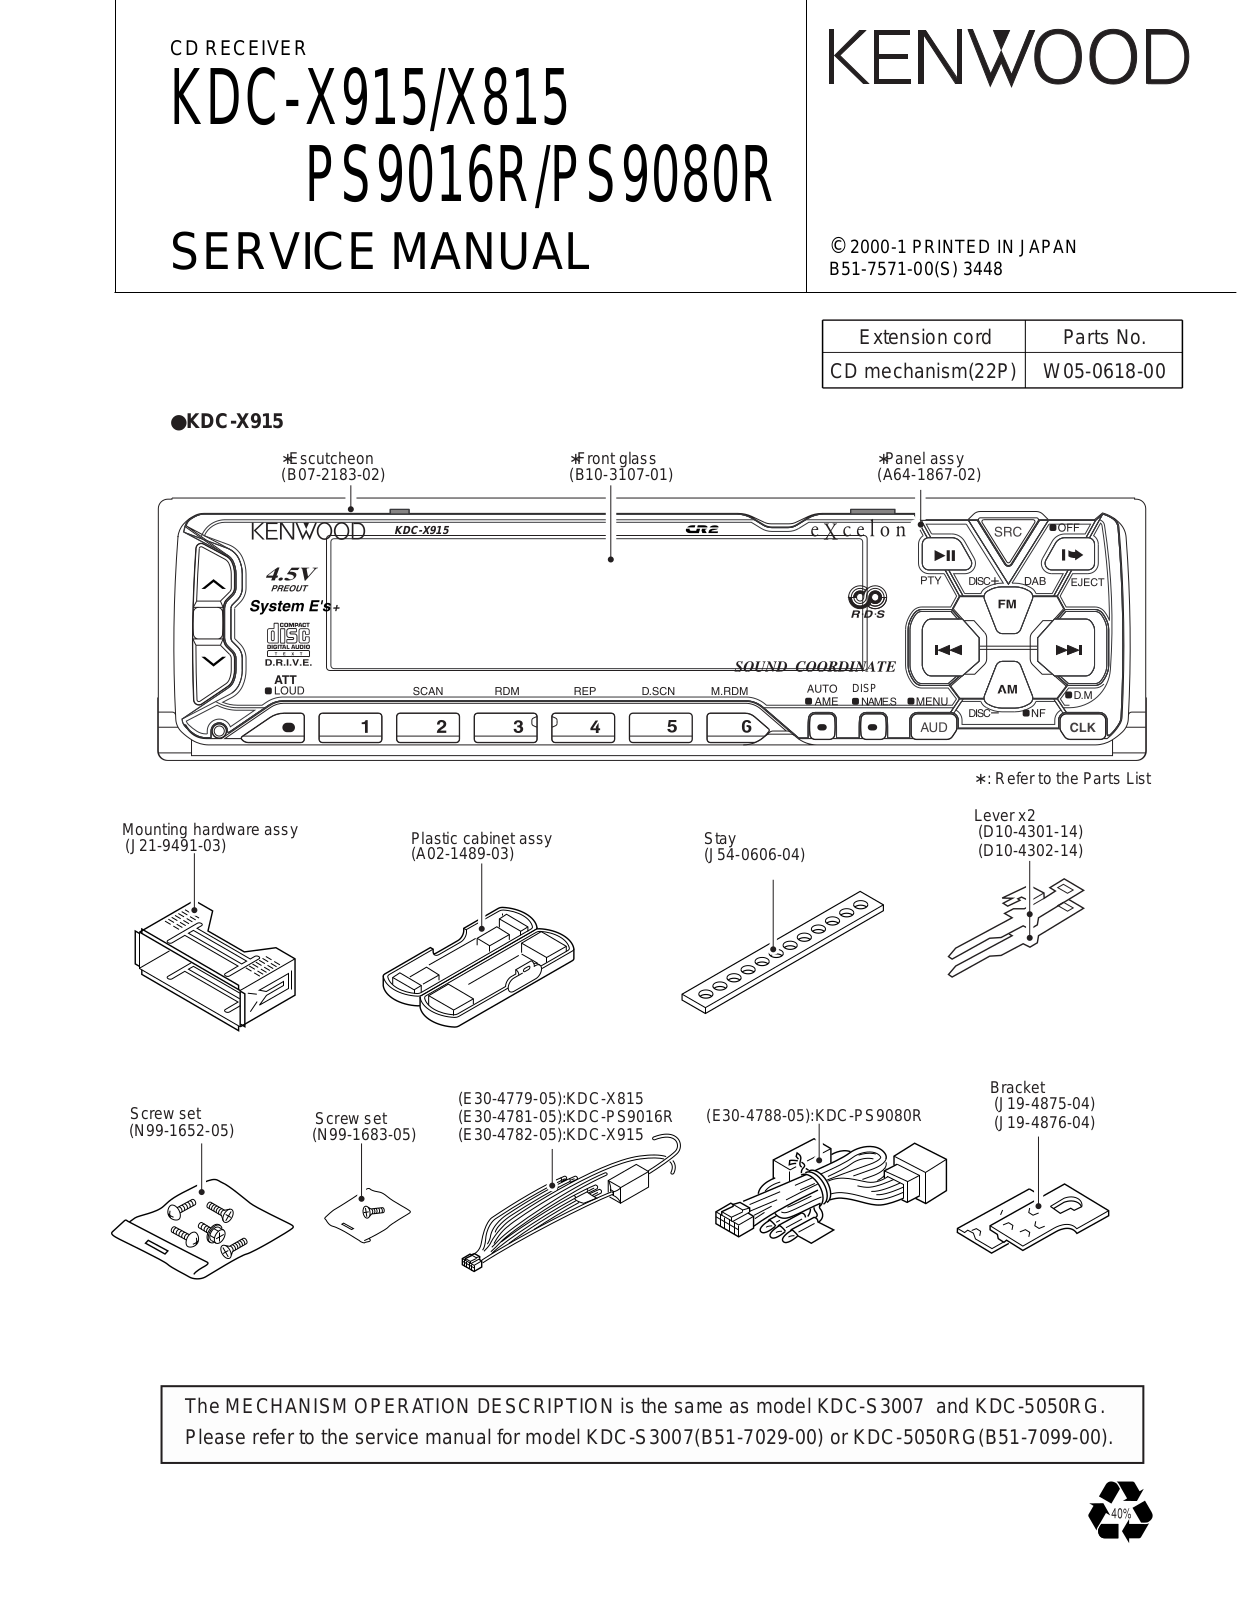 KENWOOD KDC-X815, KCD.X915, KDC-PS9016R, KDC-PS9080R Service Manual